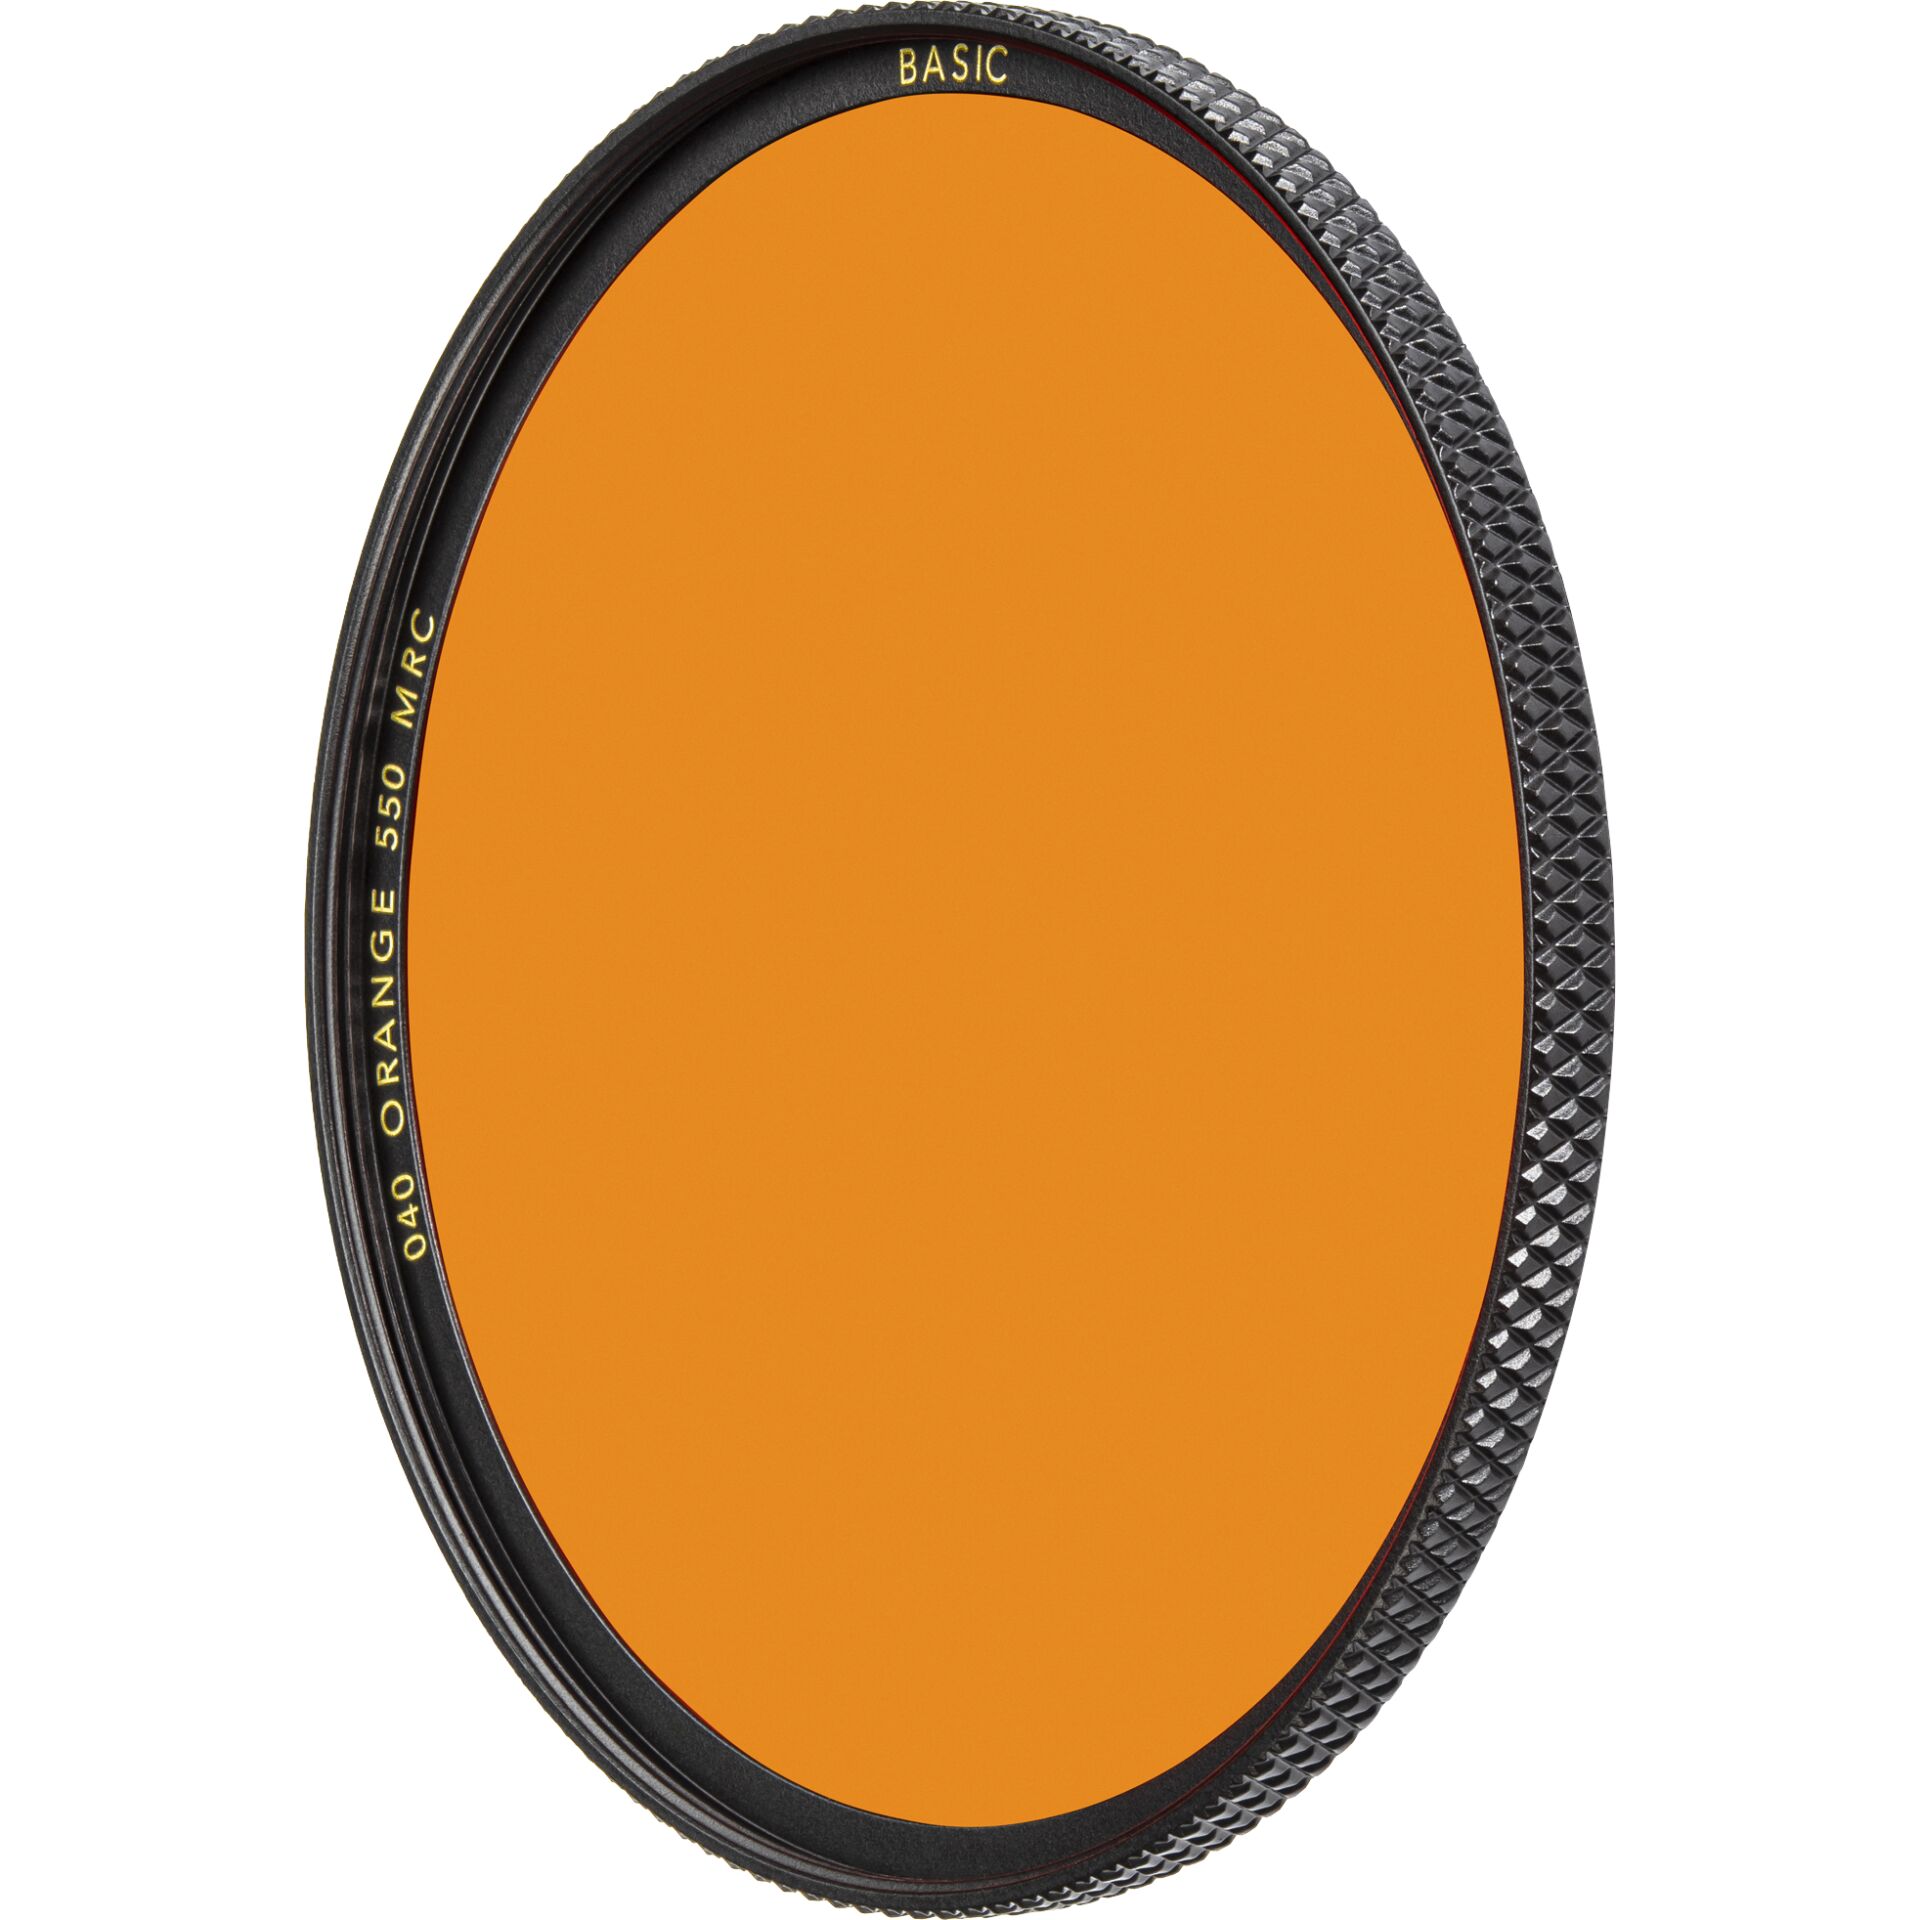 B+W Filter 77mm Orange 550 MRC Basic